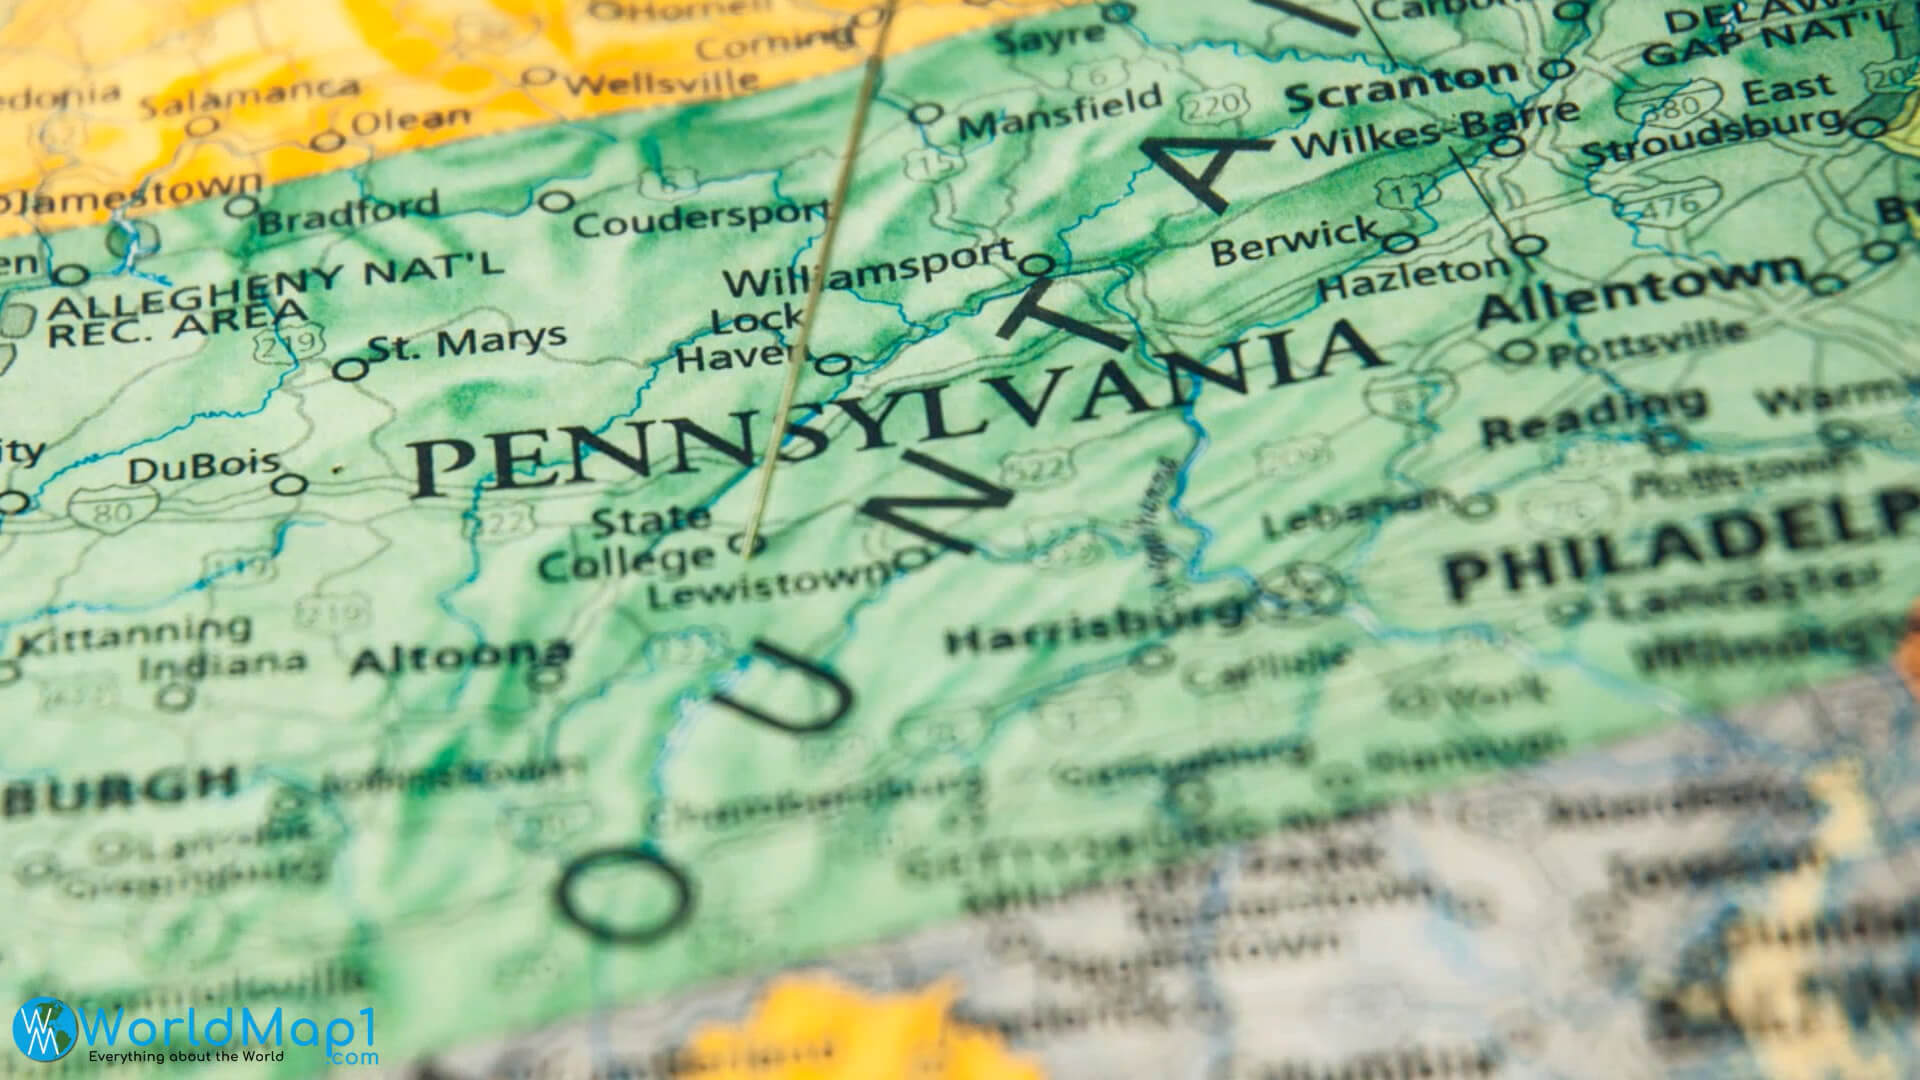 Pennsylvania Cities Map